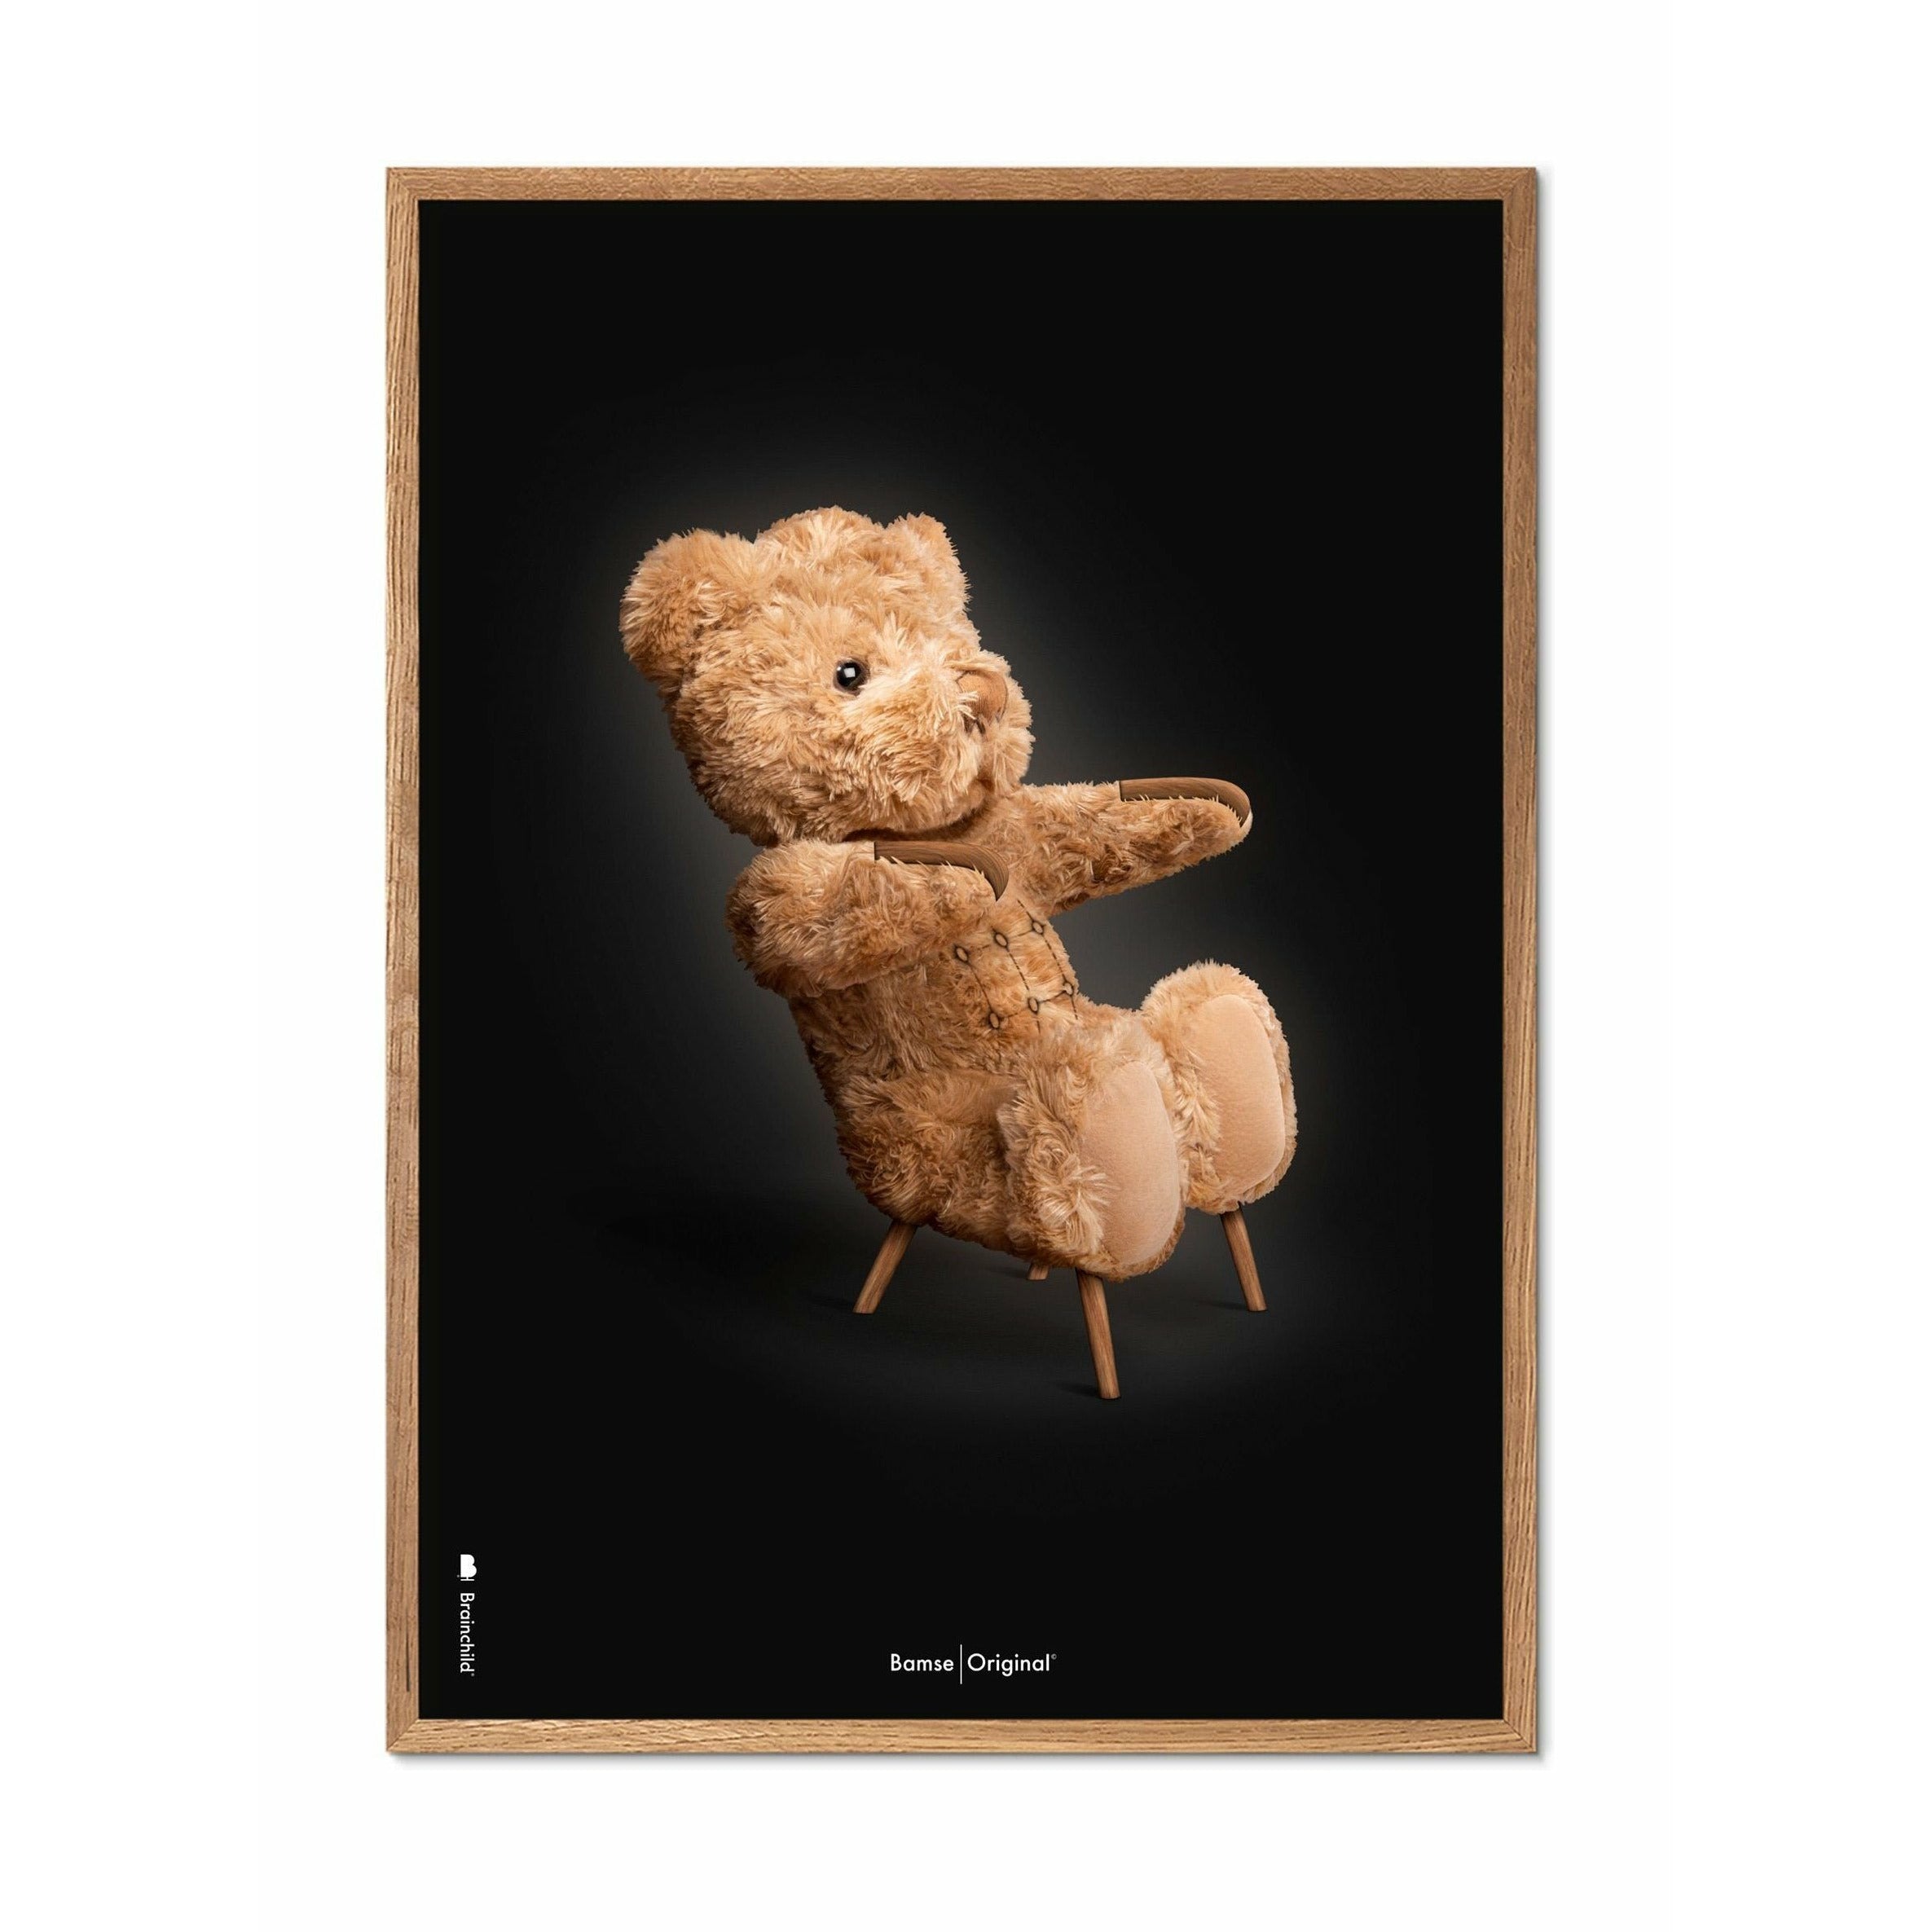 Brainchild Teddy Bear Classic Poster, Frame Made Of Light Wood 30x40 Cm, Black Background